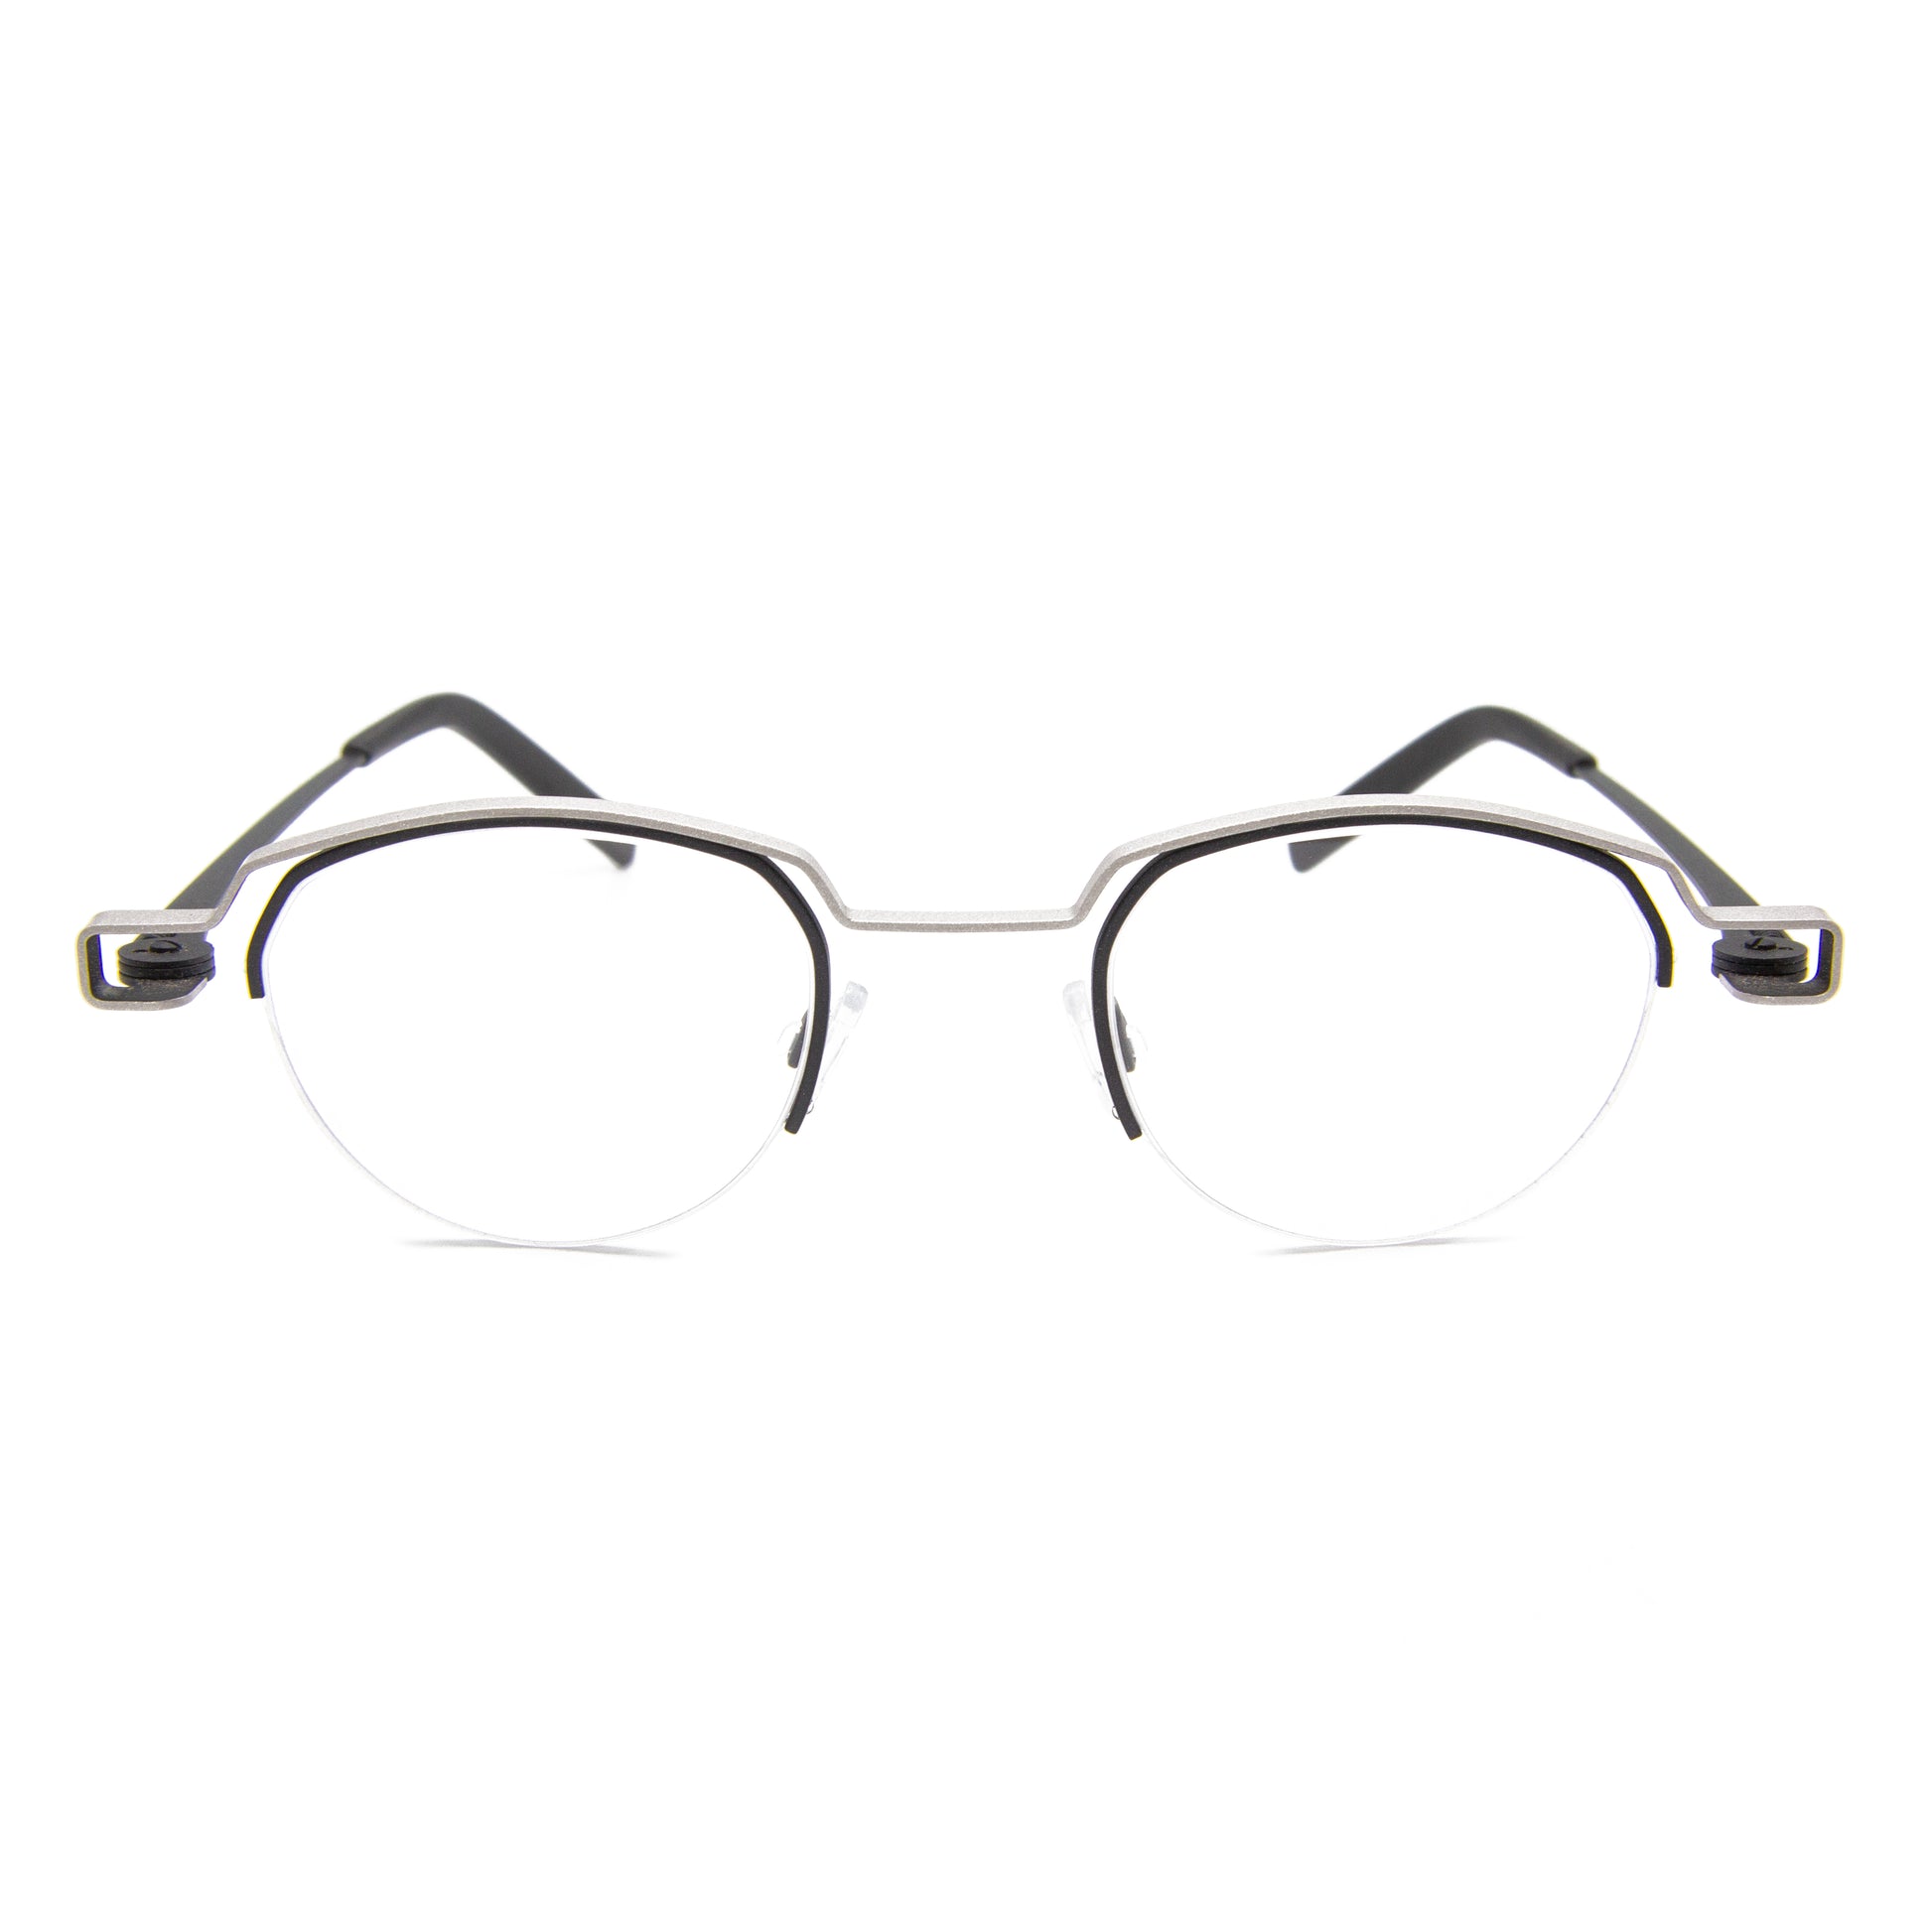 Theo - Eyewear - Puree - 229 - Glasses